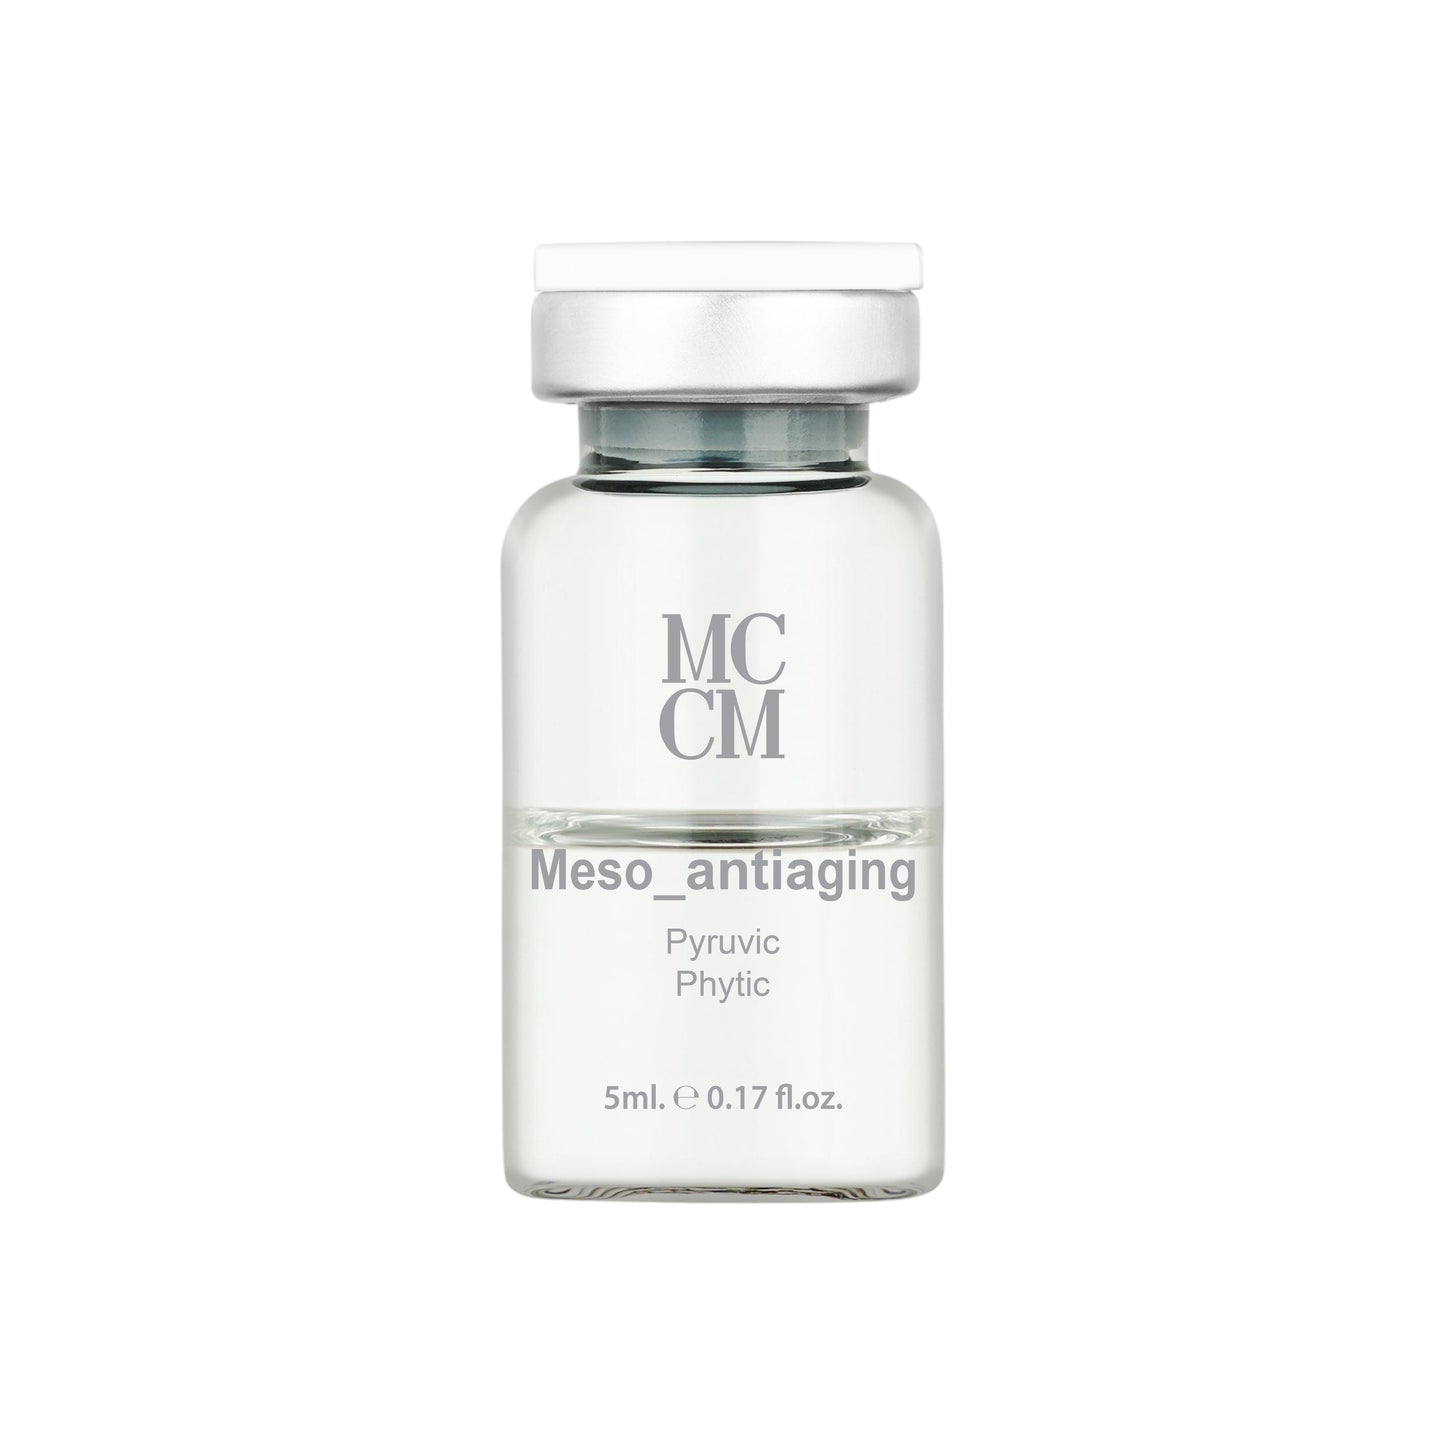 Meso_antiaging - MCCM Medical Cosmetics